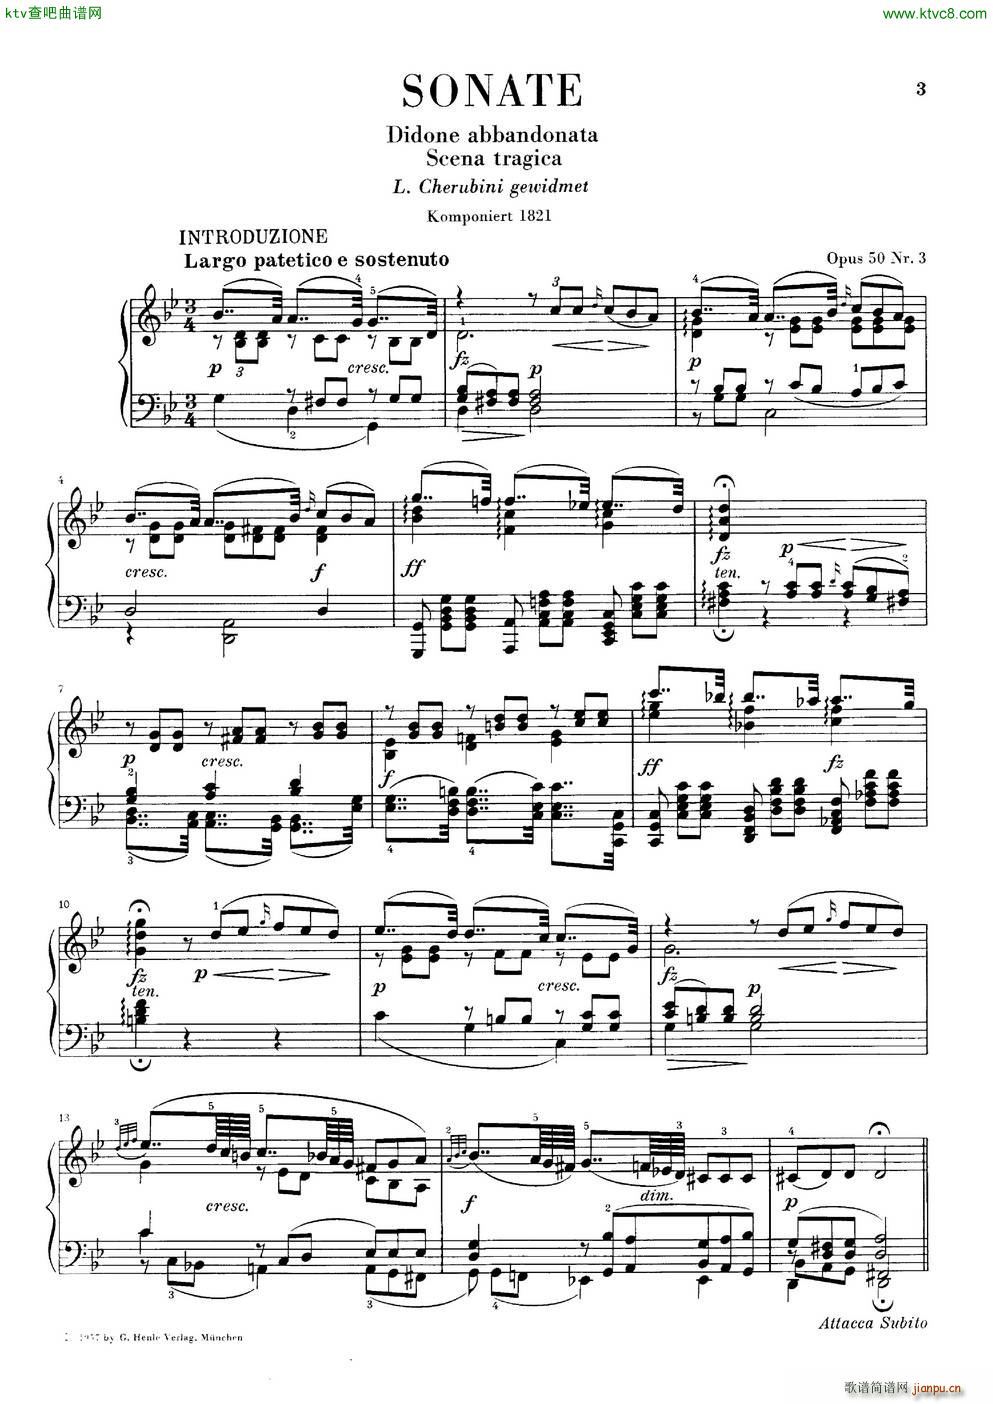 Clementi Didune Abandonata Op50 No3()3